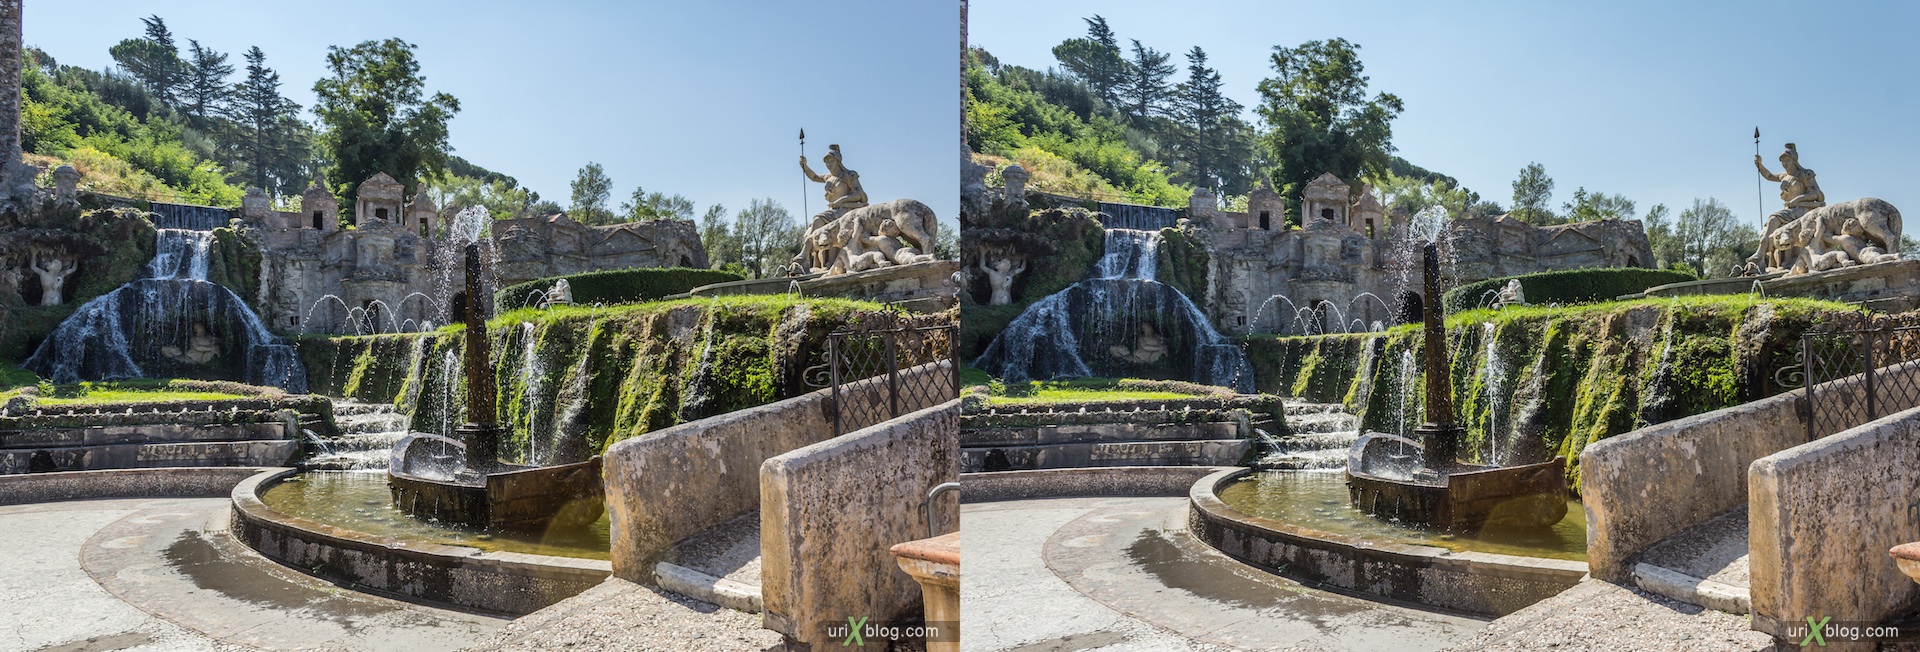 2012, Fountain of Rometta, Fontana della Rometta, villa D'Este, Italy, Tivoli, Rome, 3D, stereo pair, cross-eyed, crossview, cross view stereo pair